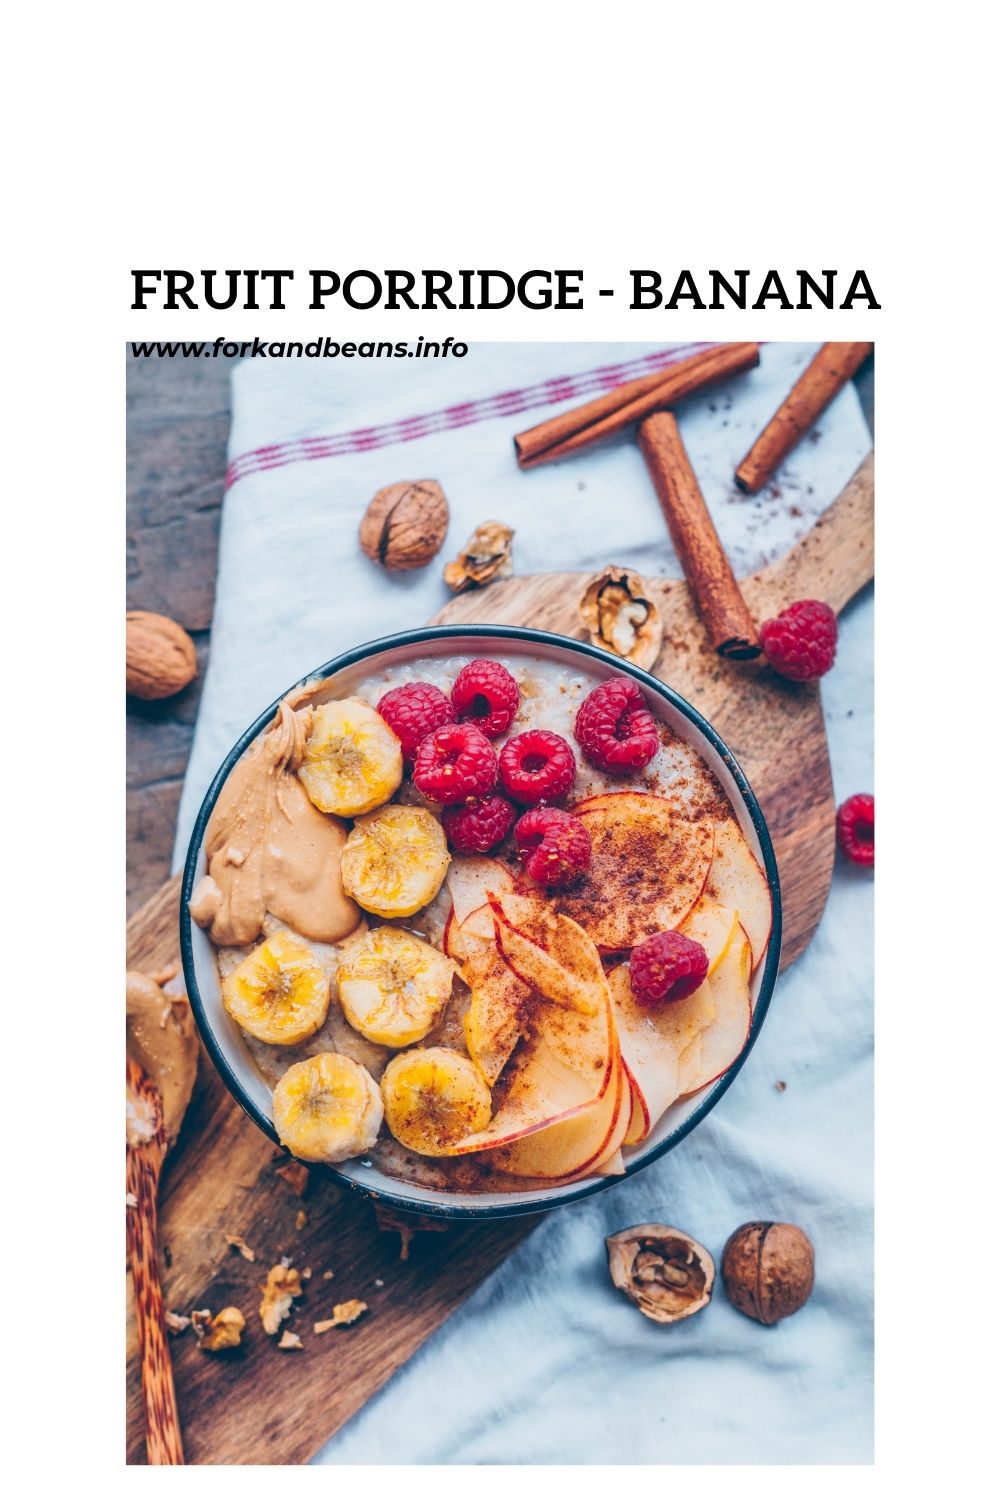 BANANA CINNAMON PORRIDGE WITH NUT BUTTER & FRUITS